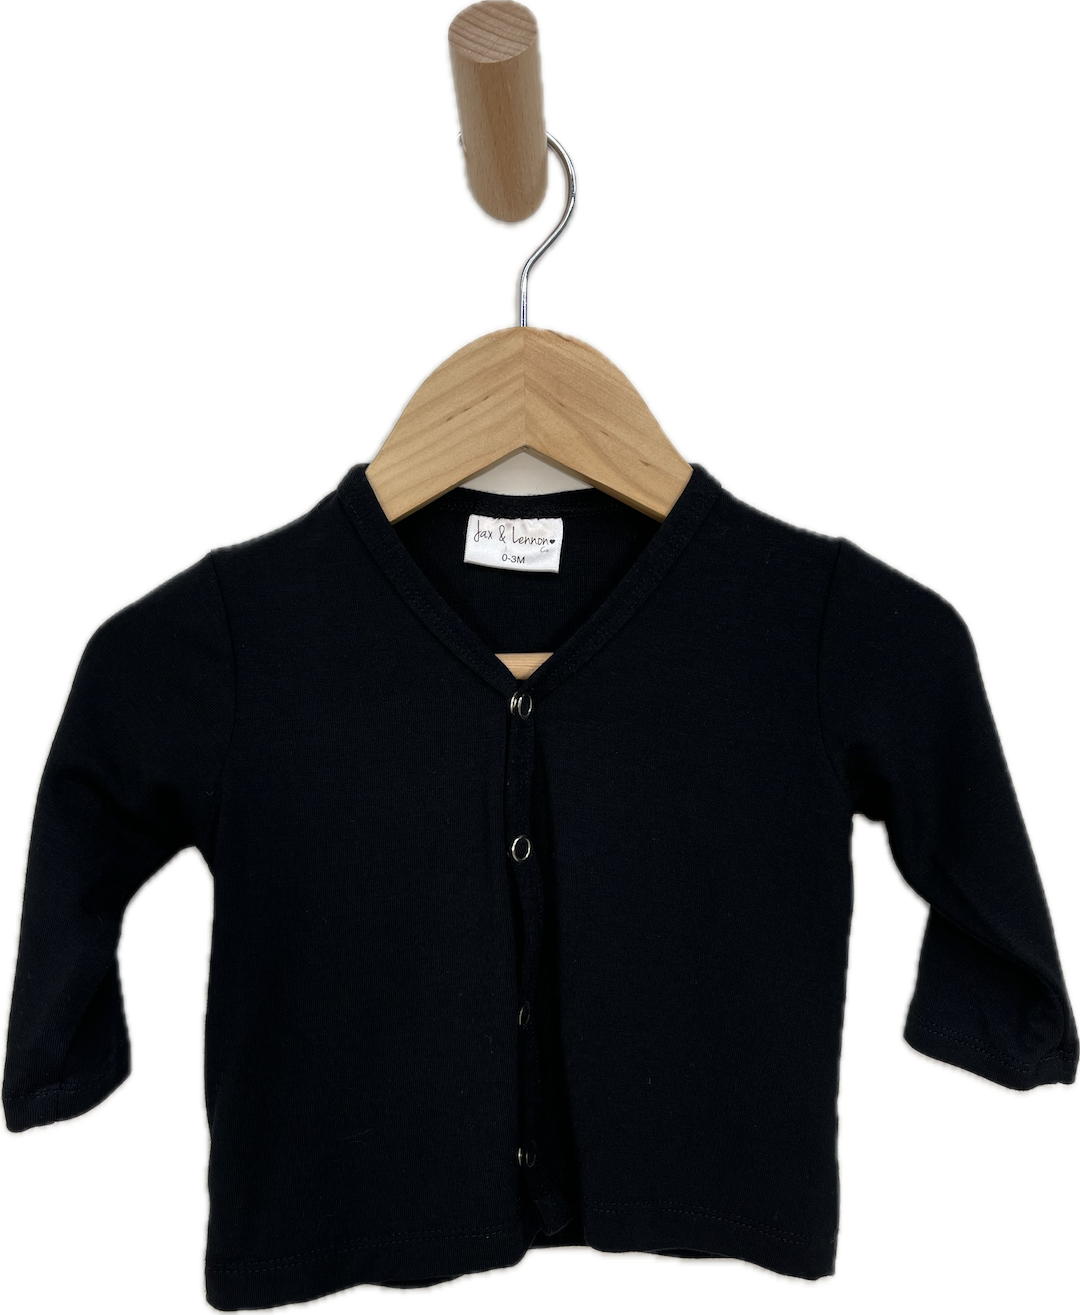 jax + lennon cardigan black 0-3m